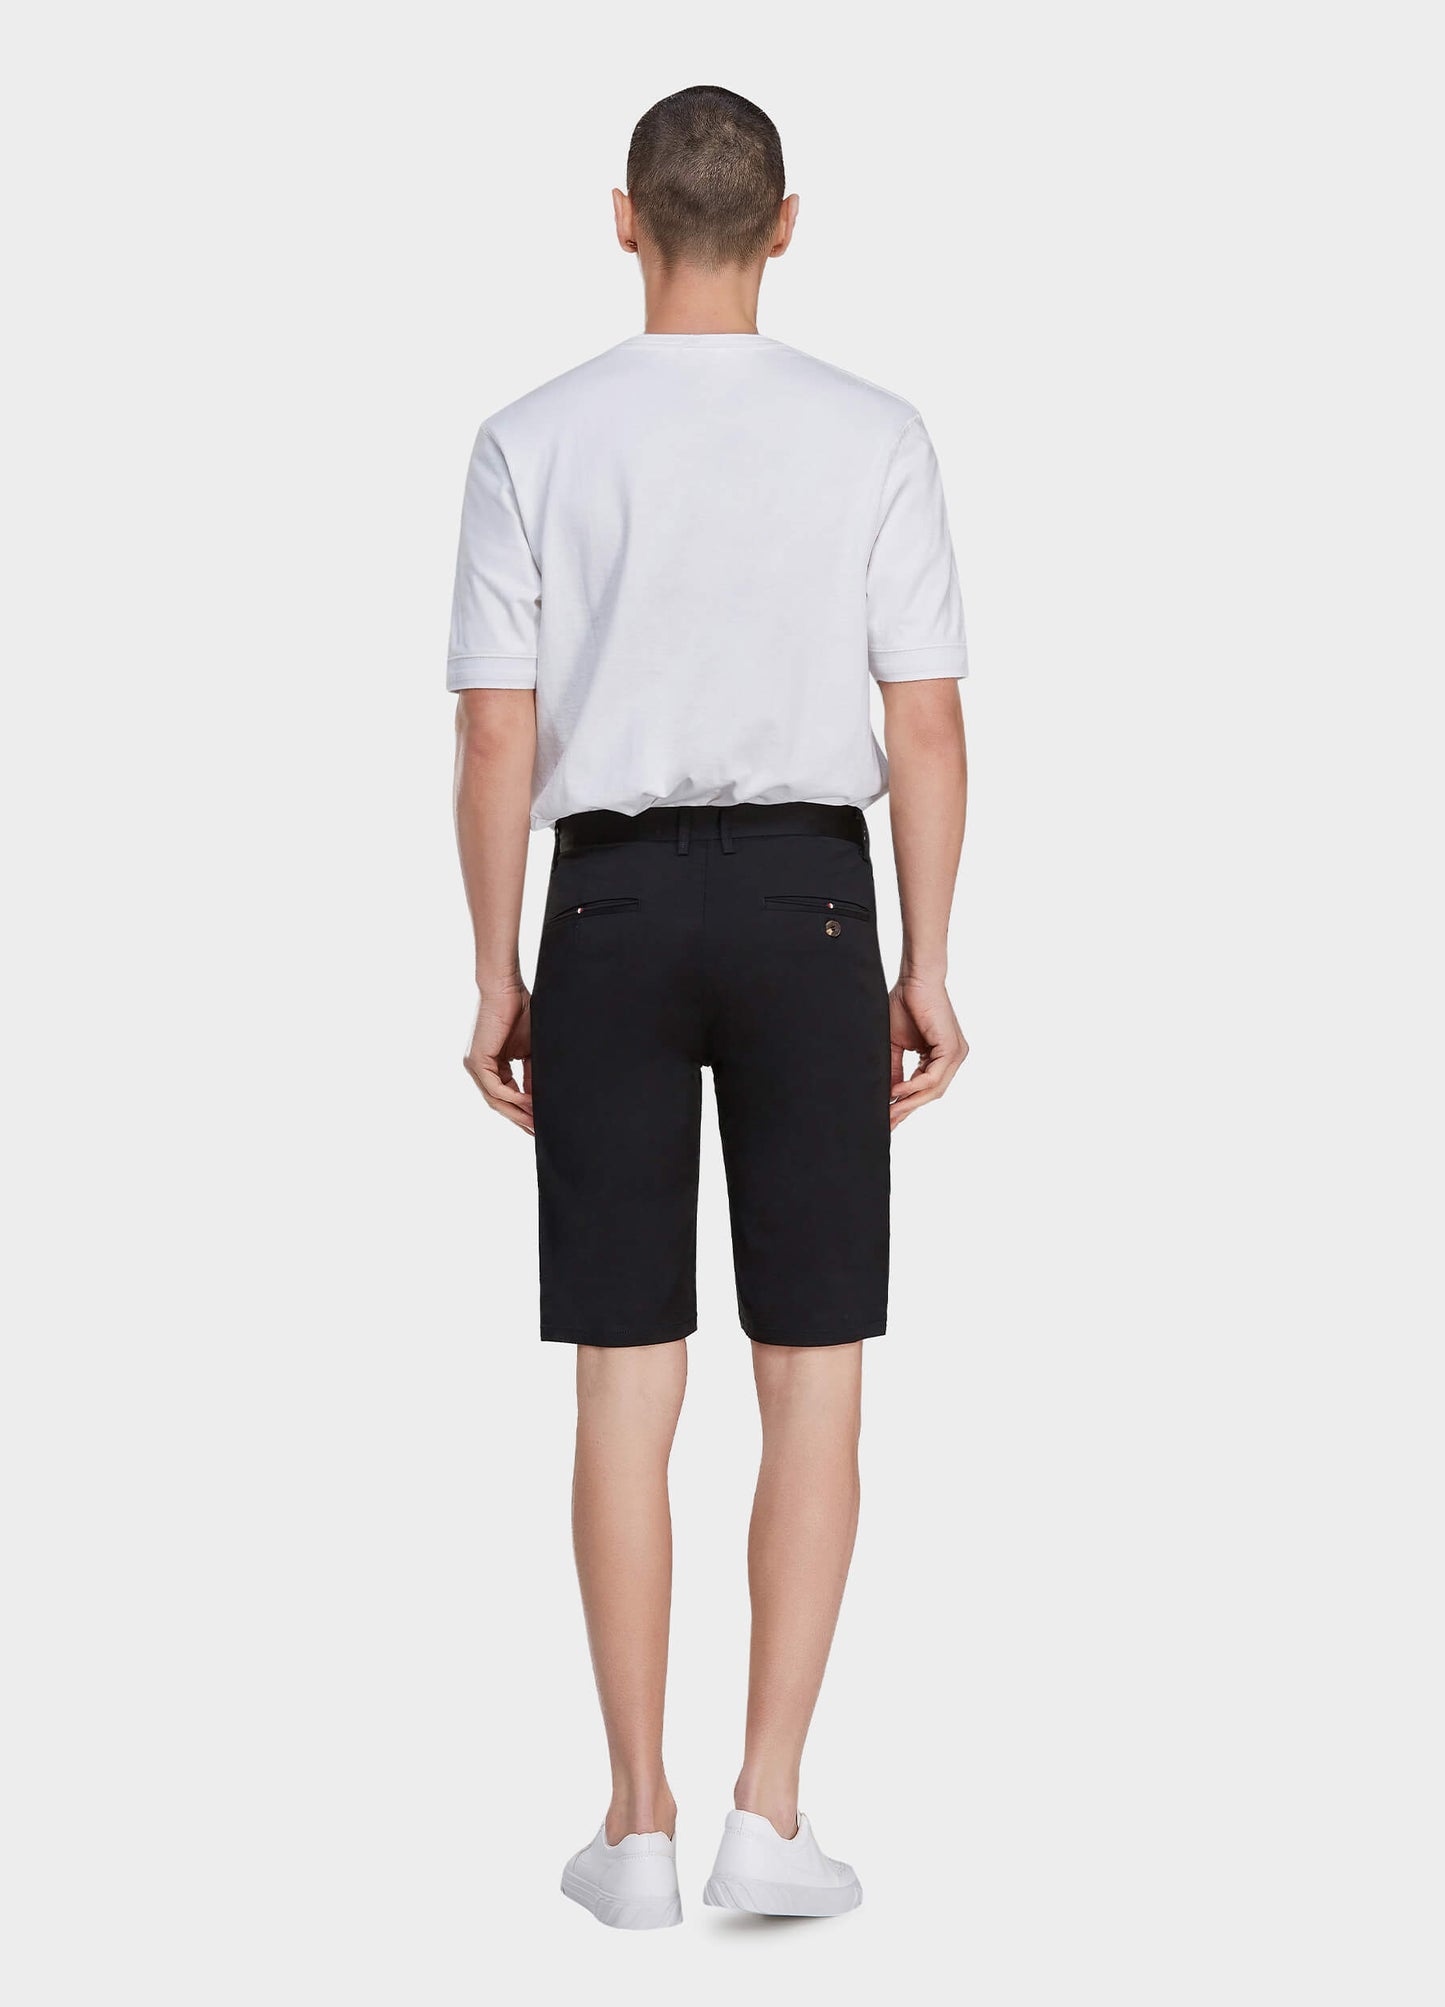 Men's Casual Button Closure Zipper Elasticity Solid Shorts with Slant Pocket-Black back view